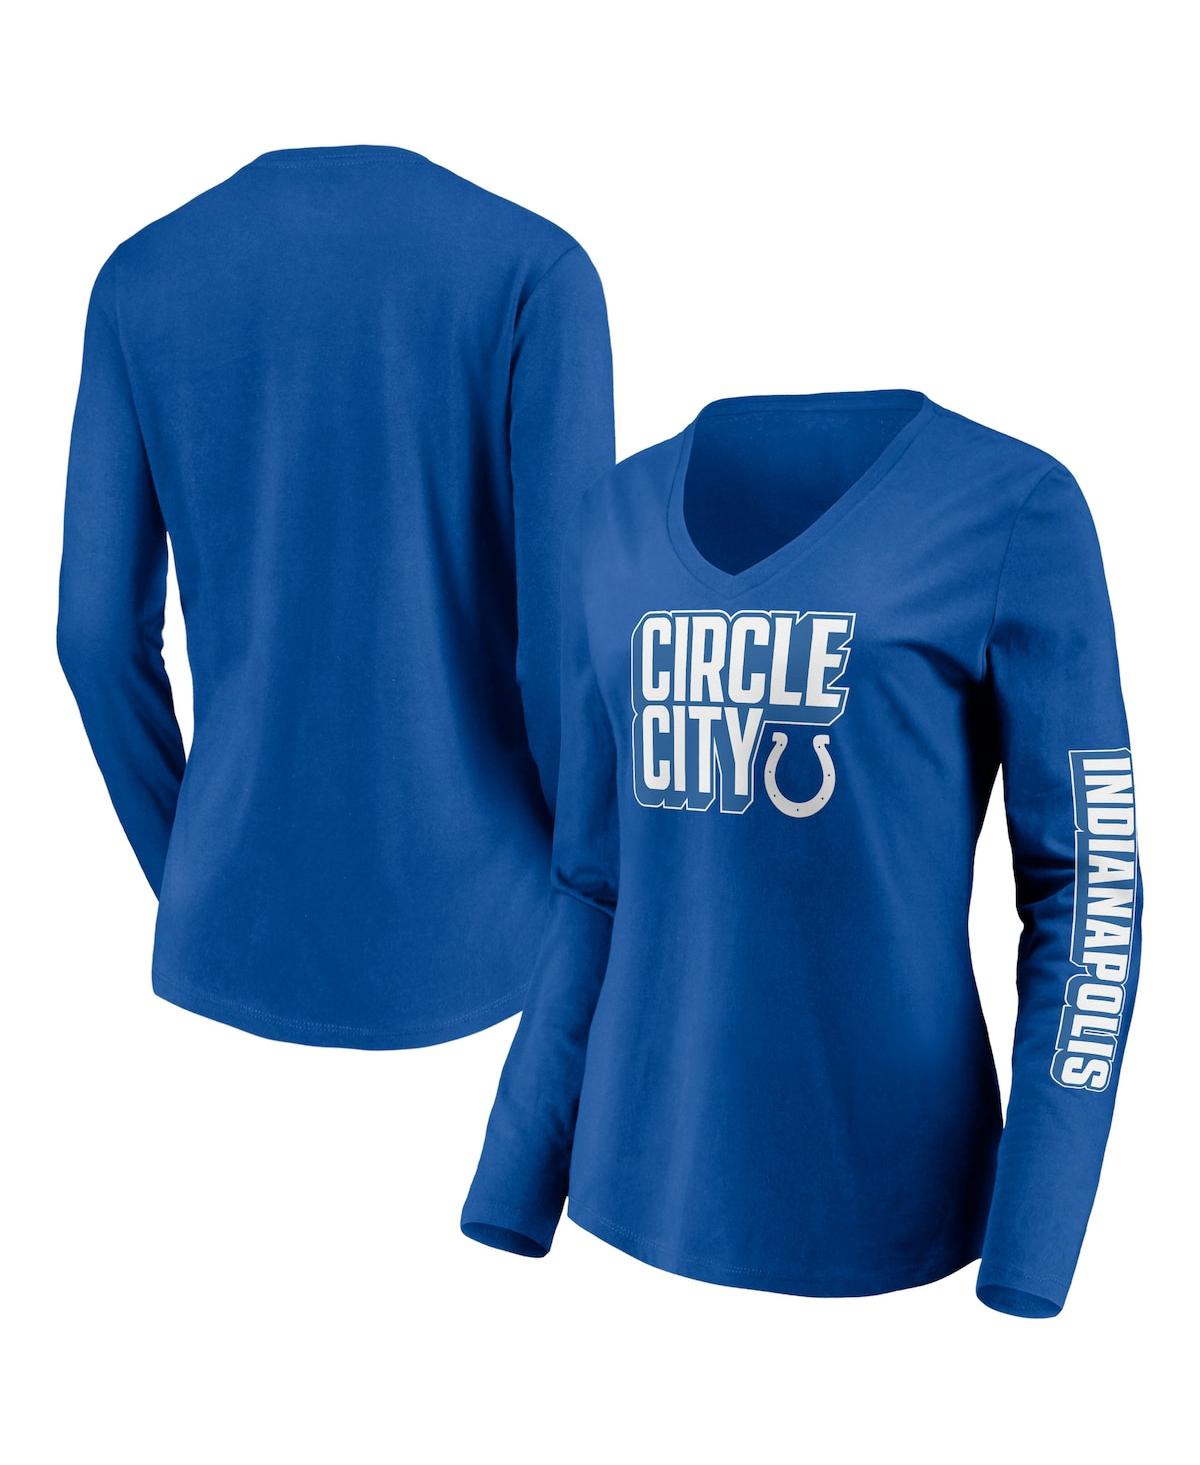 Women's Fanatics Royal Indianapolis Colts Hometown Collection V-Neck Long Sleeve T-shirt - Royal